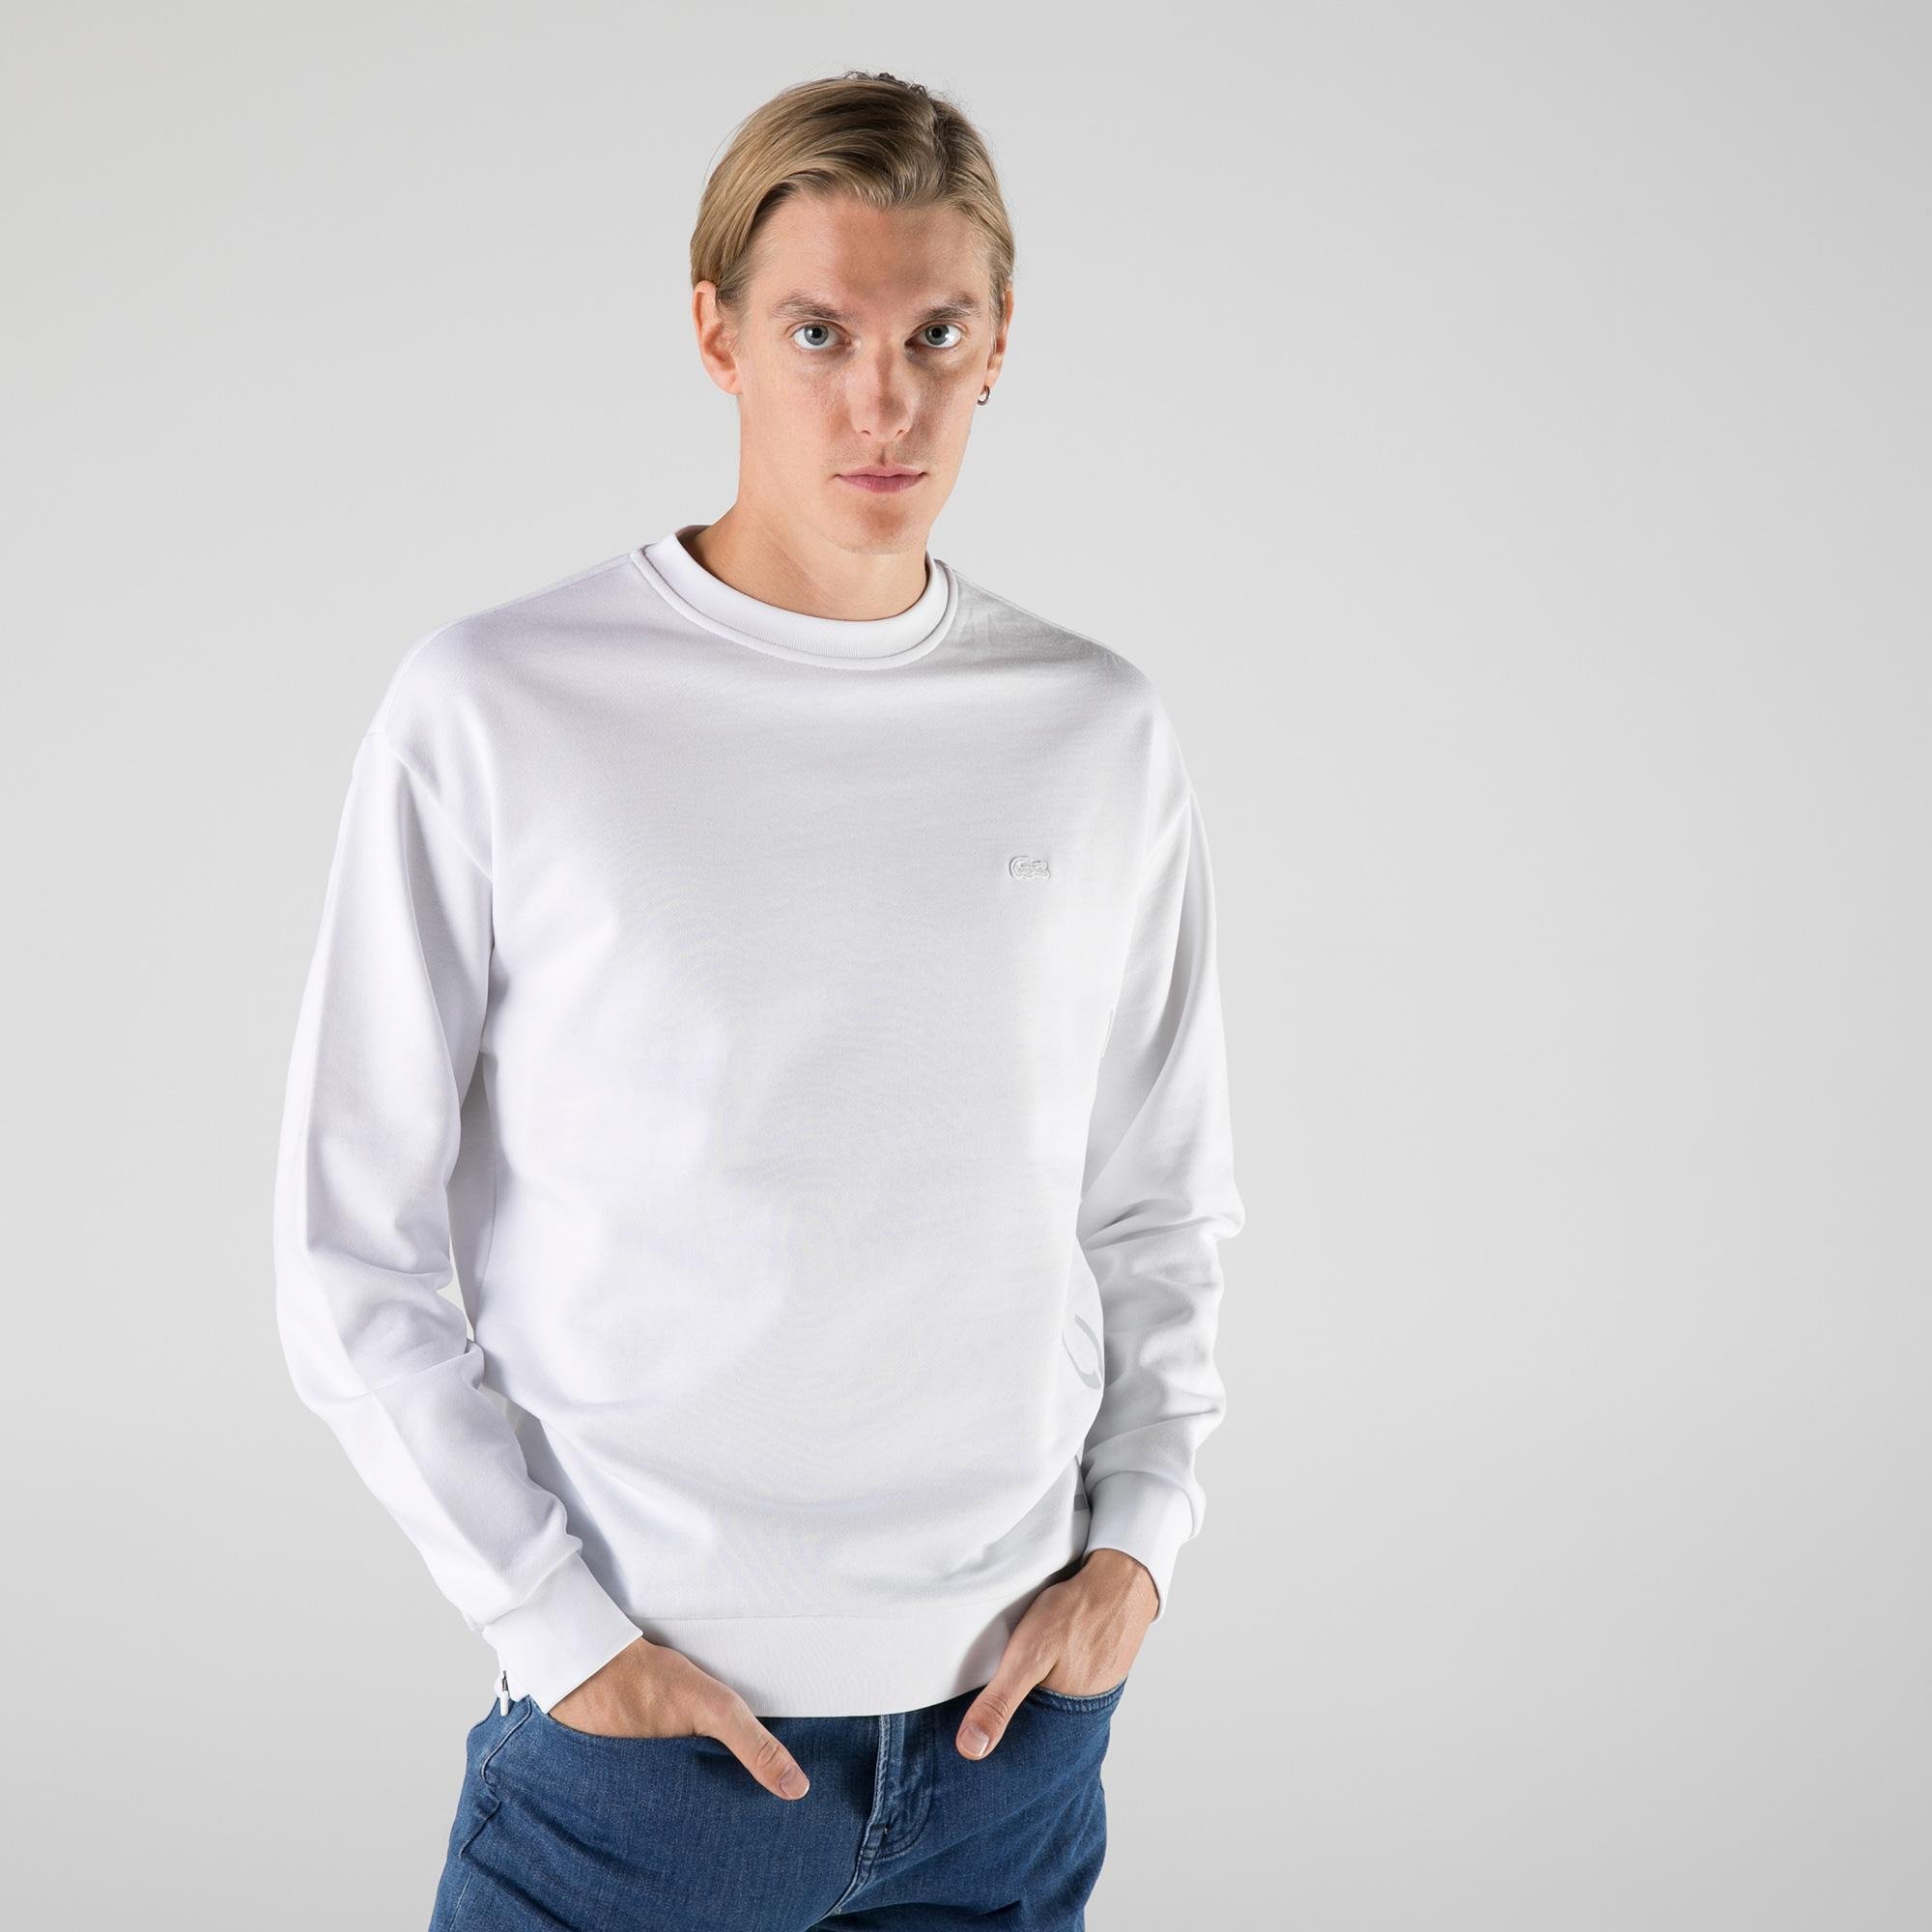 Lacoste Men's Slim Fit Sweatshirt